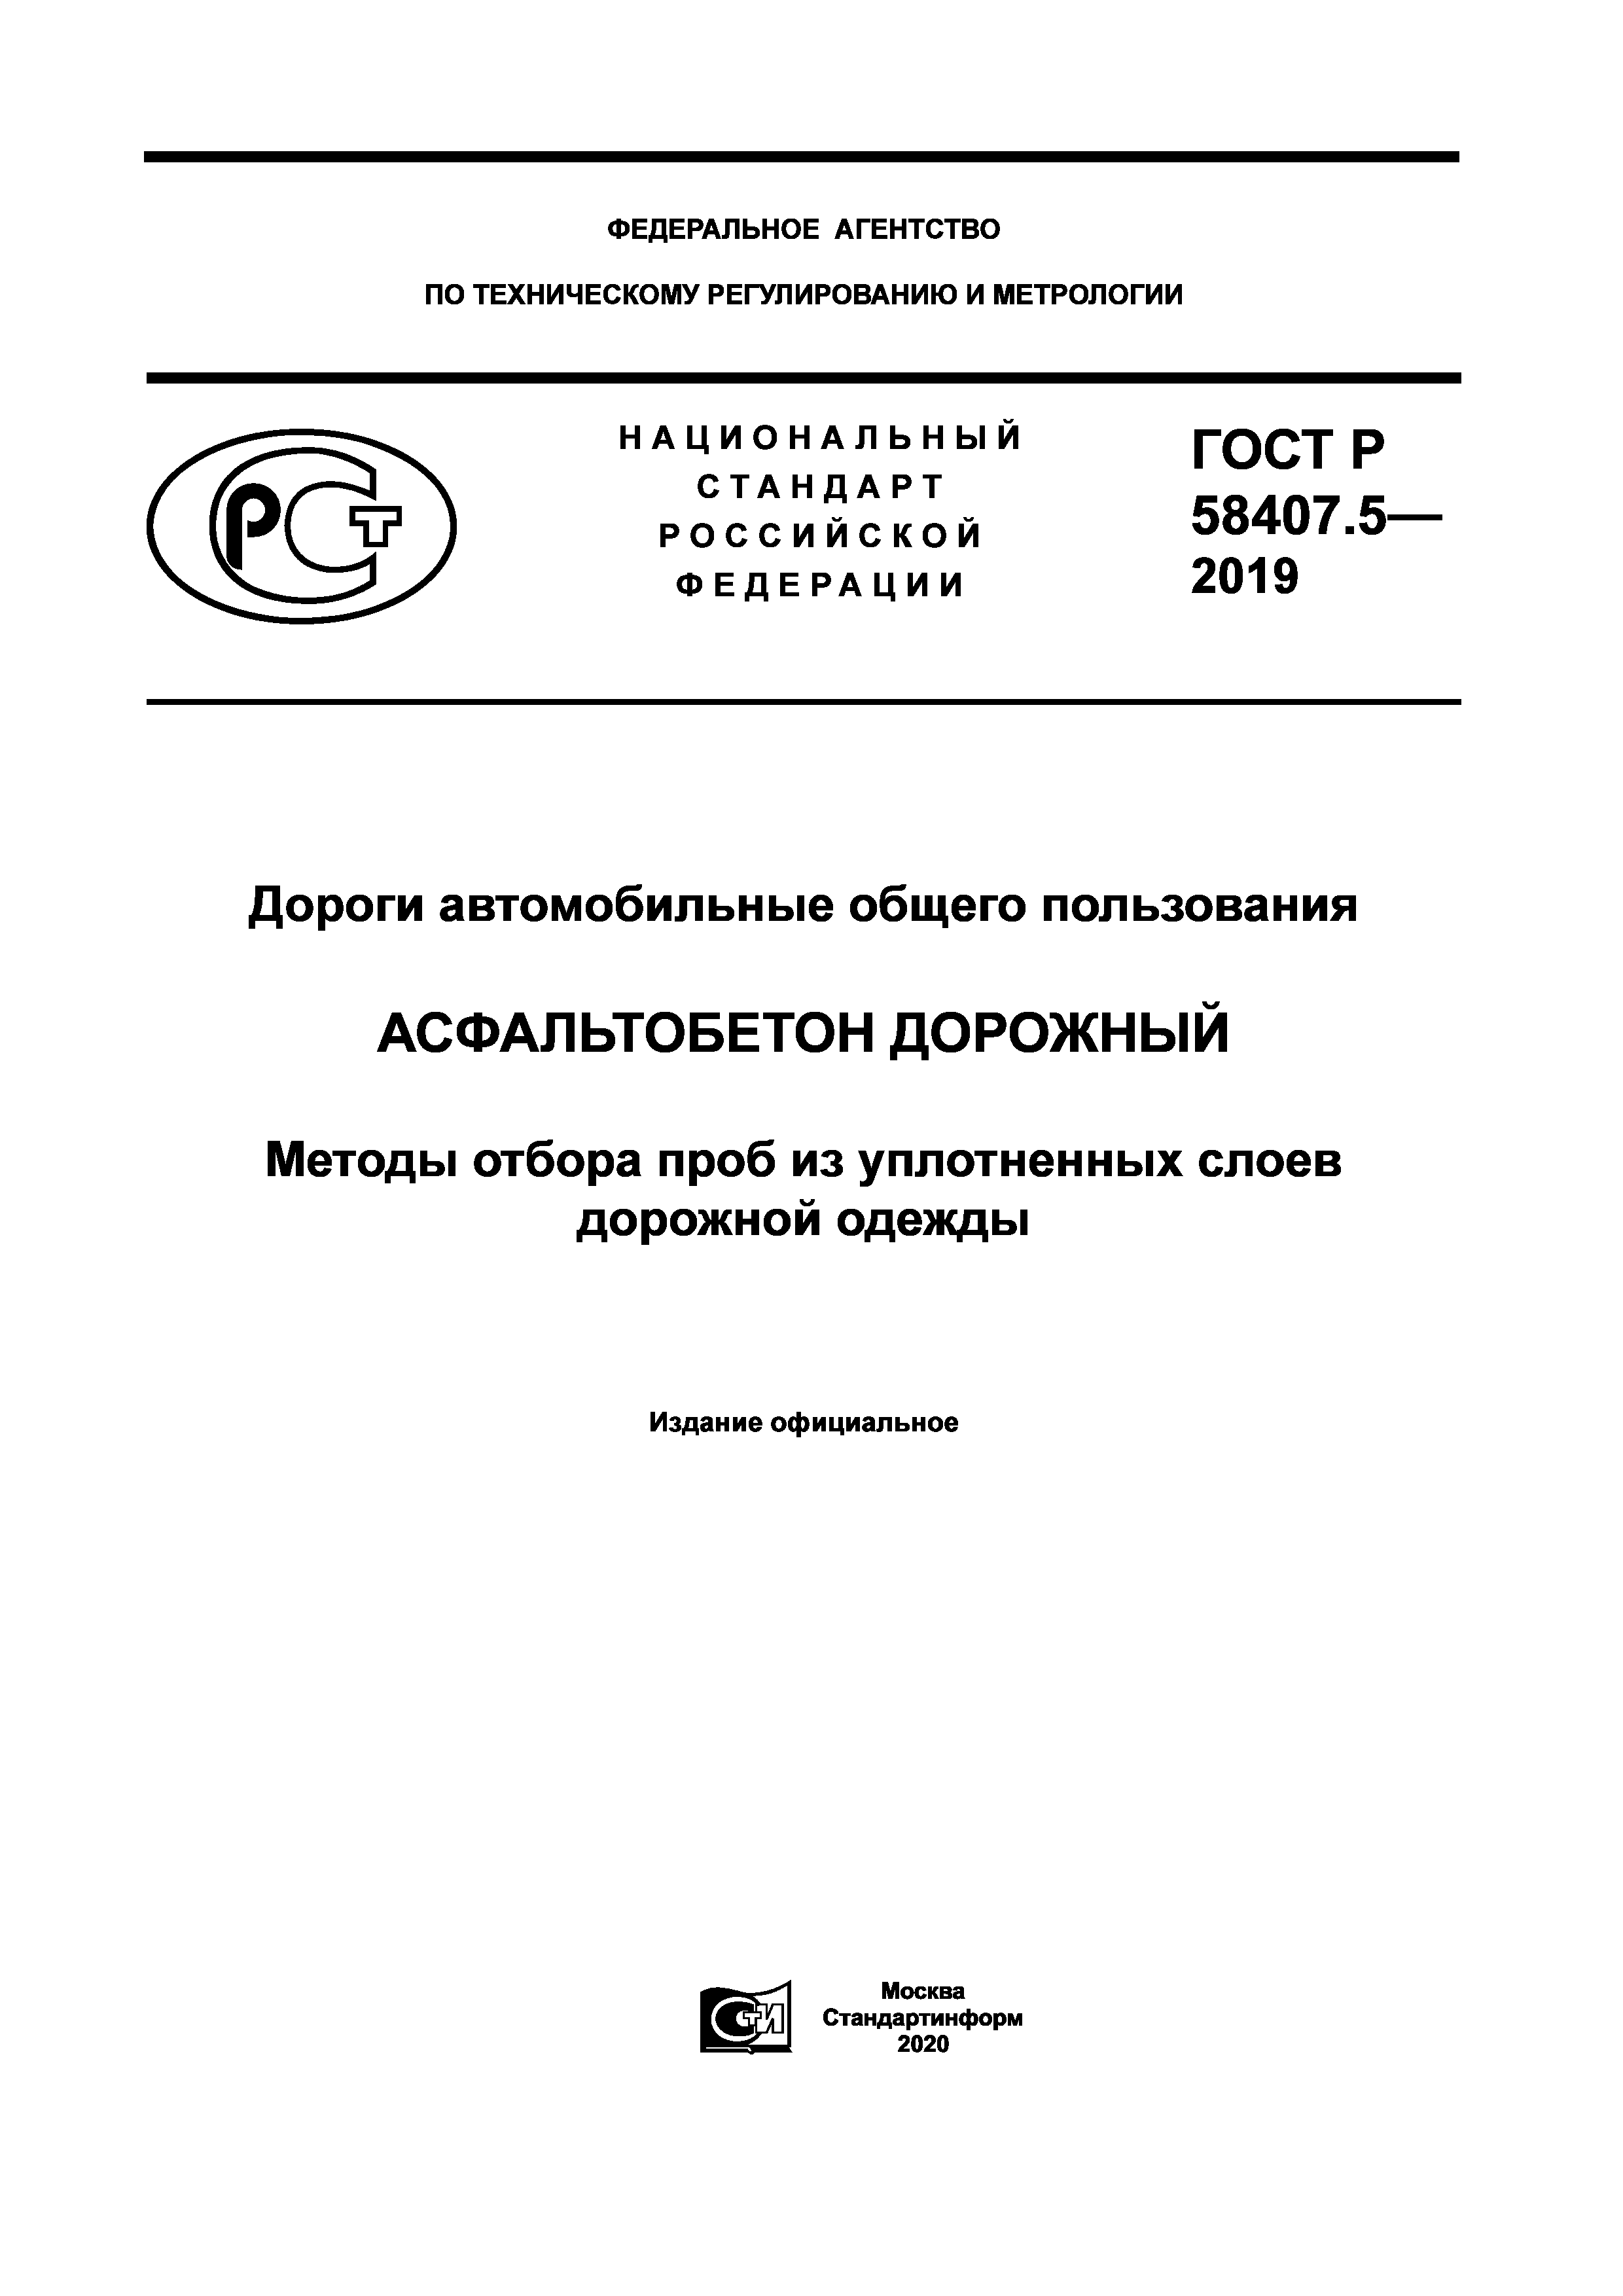 ГОСТ Р 58407.5-2019